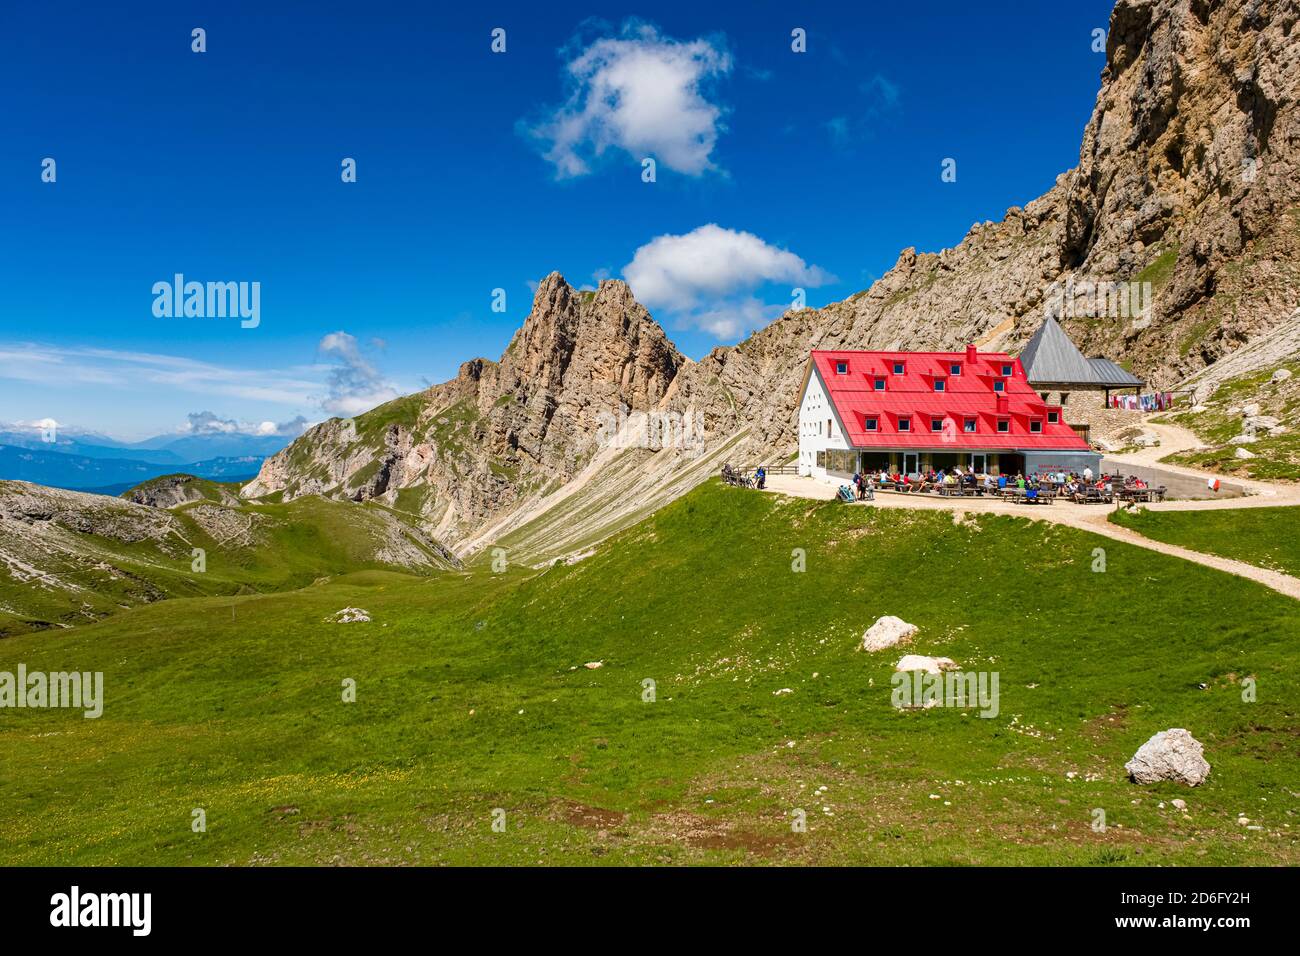 Tierser Alpl Hütte, a mountain hut, at Seiser Alm, Alpe di Siusi, the mountain Rosengarten group, Catinaccio, in the distance. Stock Photo